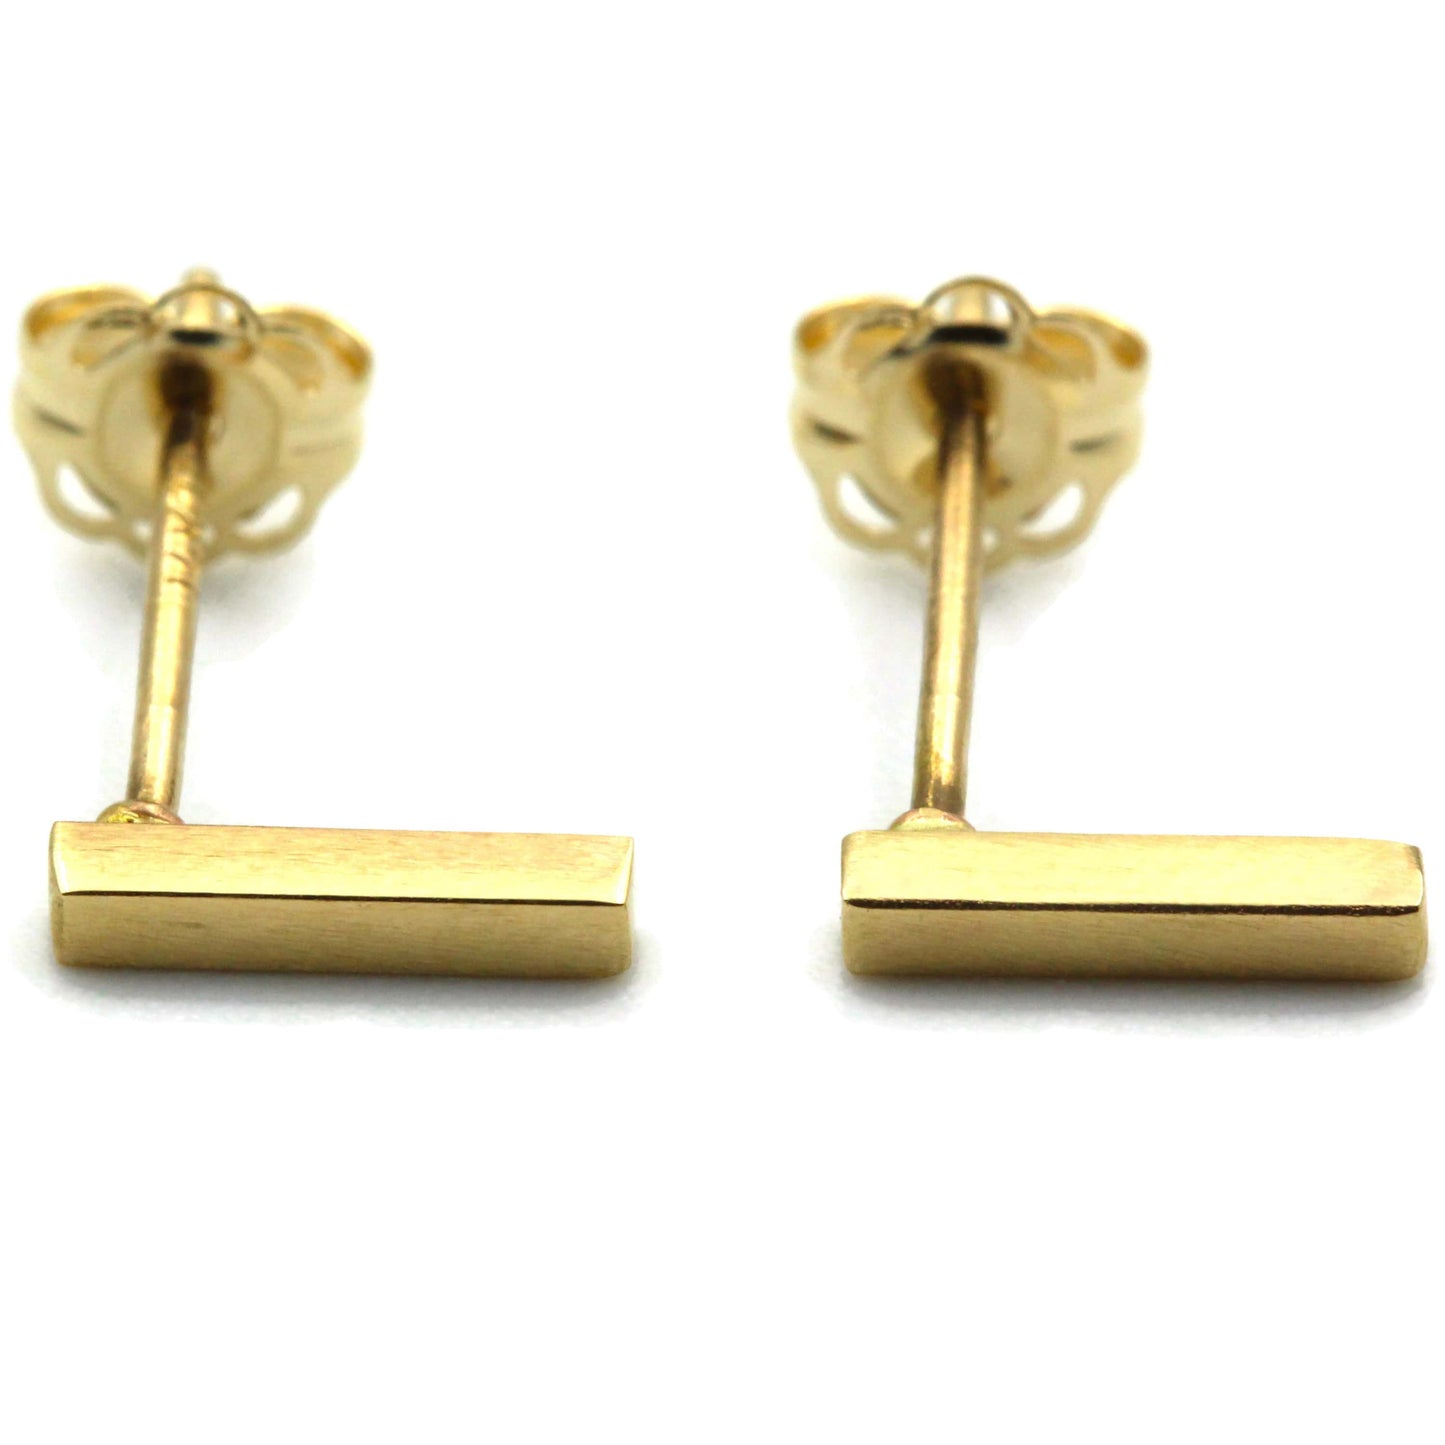 Simple earrings in gold, 14k yellow gold